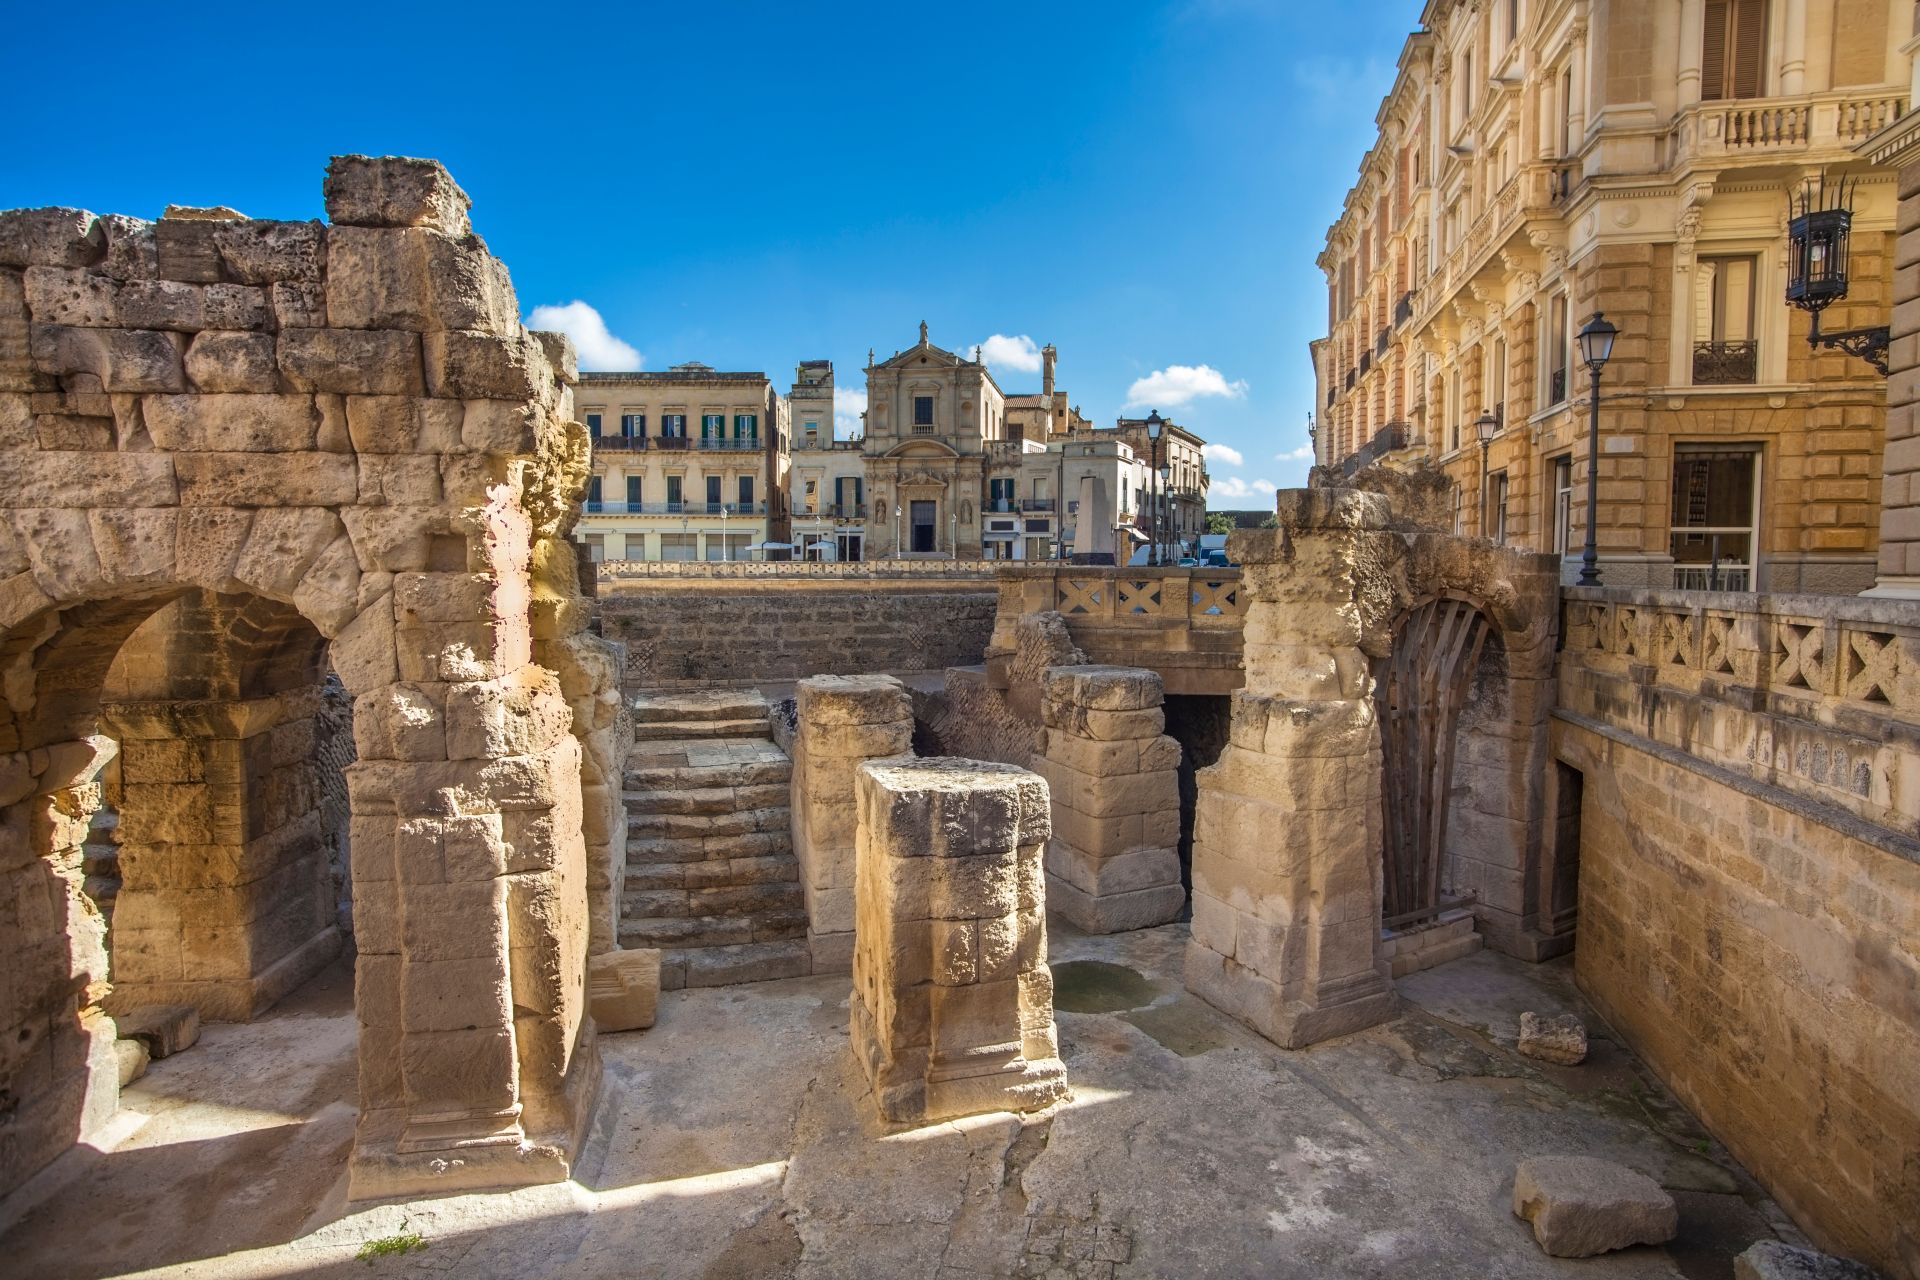 At-the-Roman-amphitheater-in-Piazza-SantOronzo-in-Lecce-Apulia-Italy